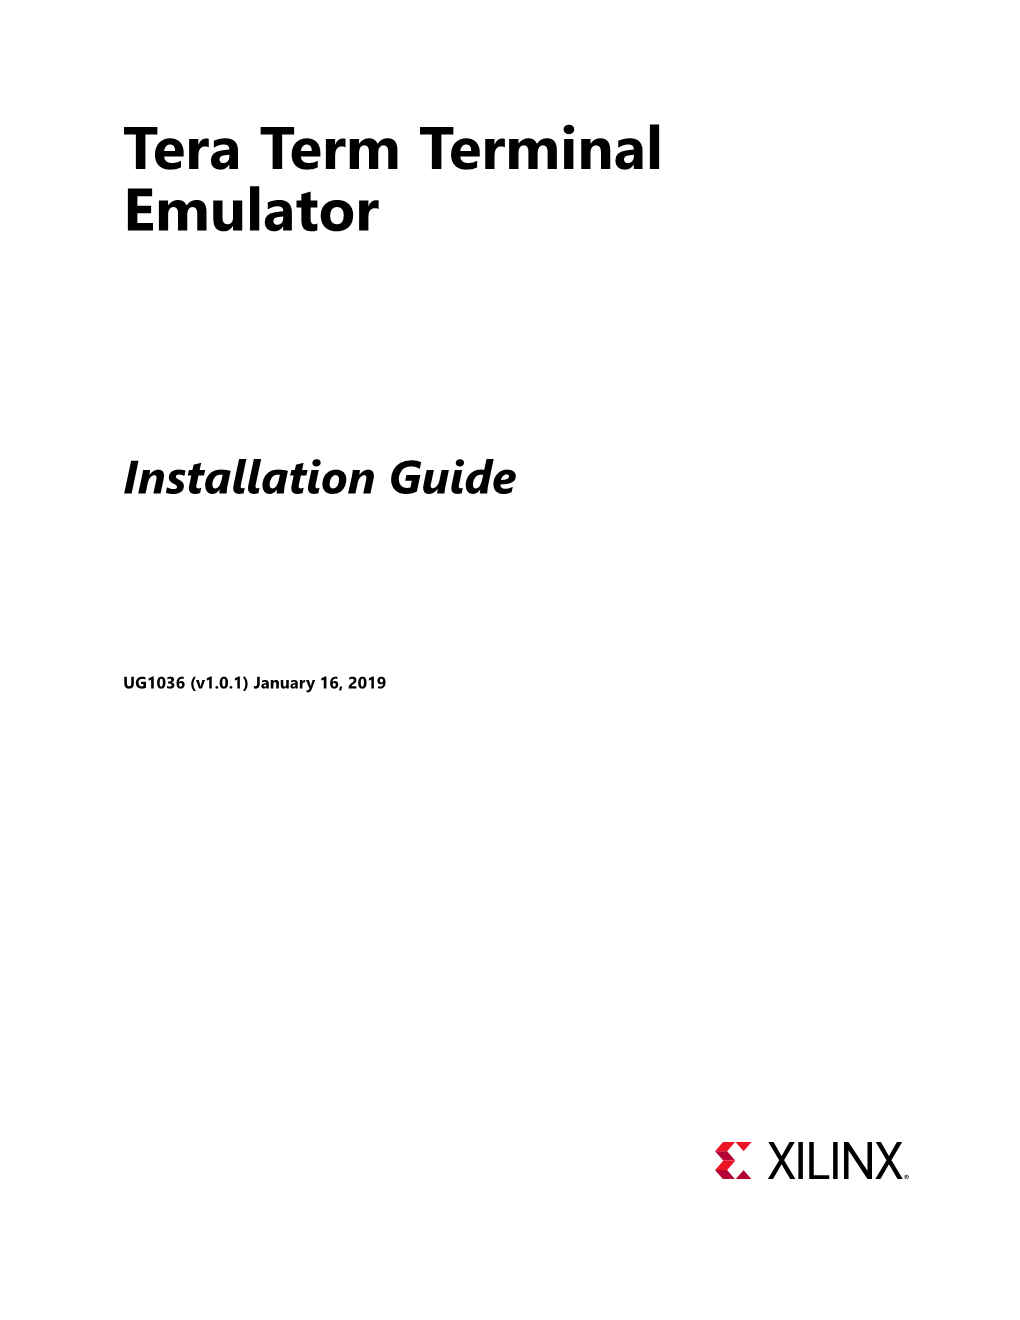 Tera Term Terminal Emulator Installation Guide Overview